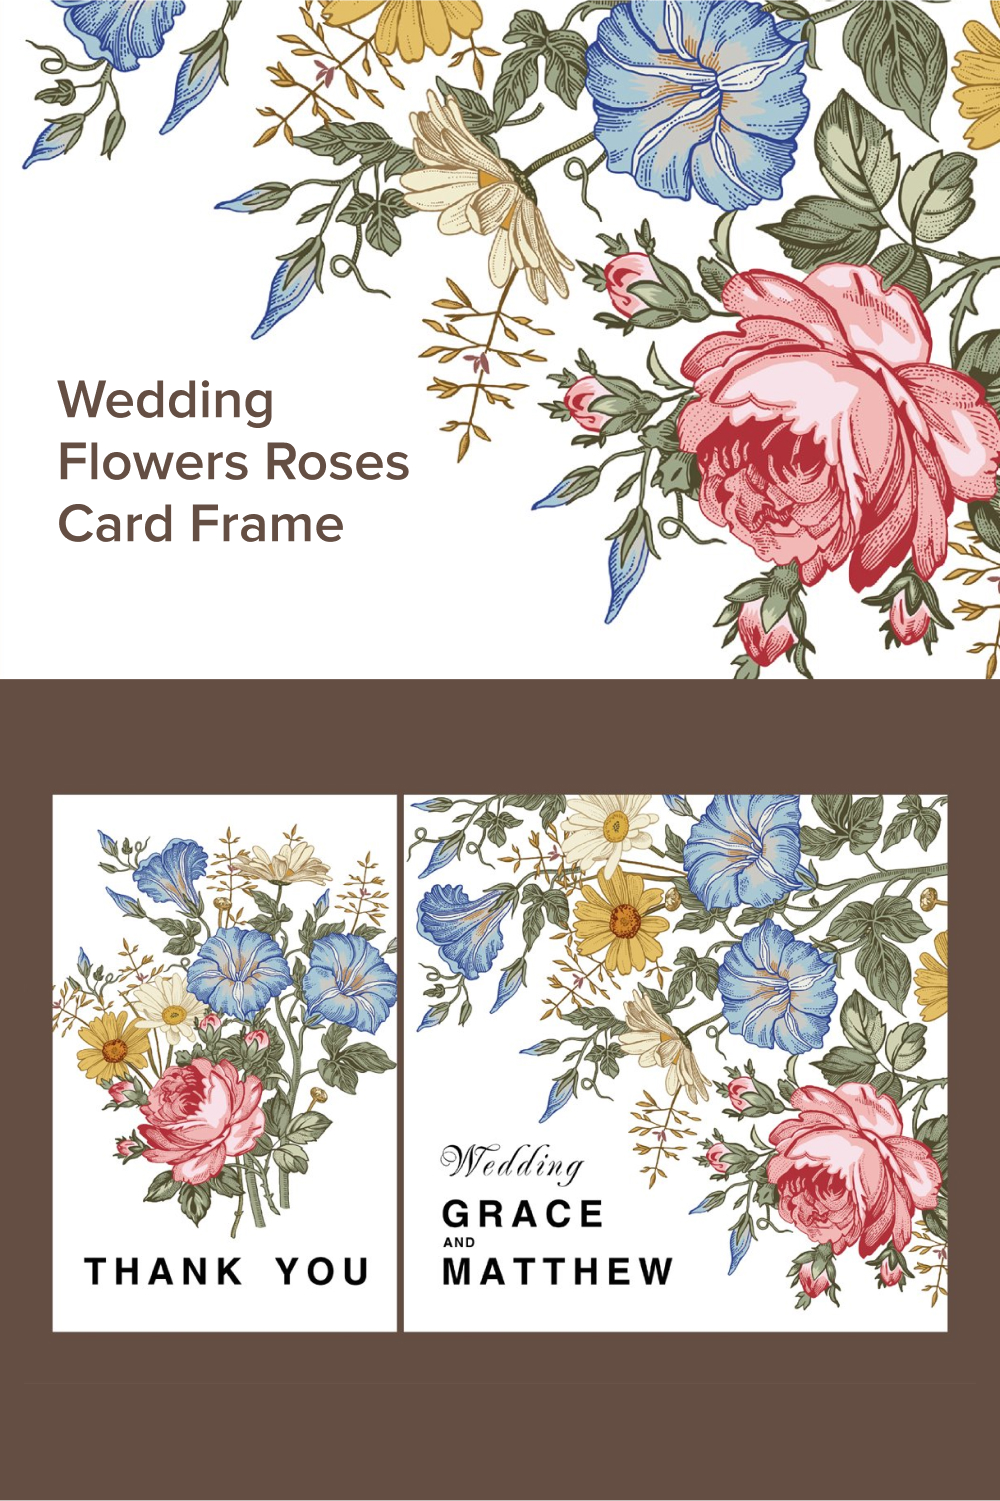 Wedding flowers roses card of pinterest.